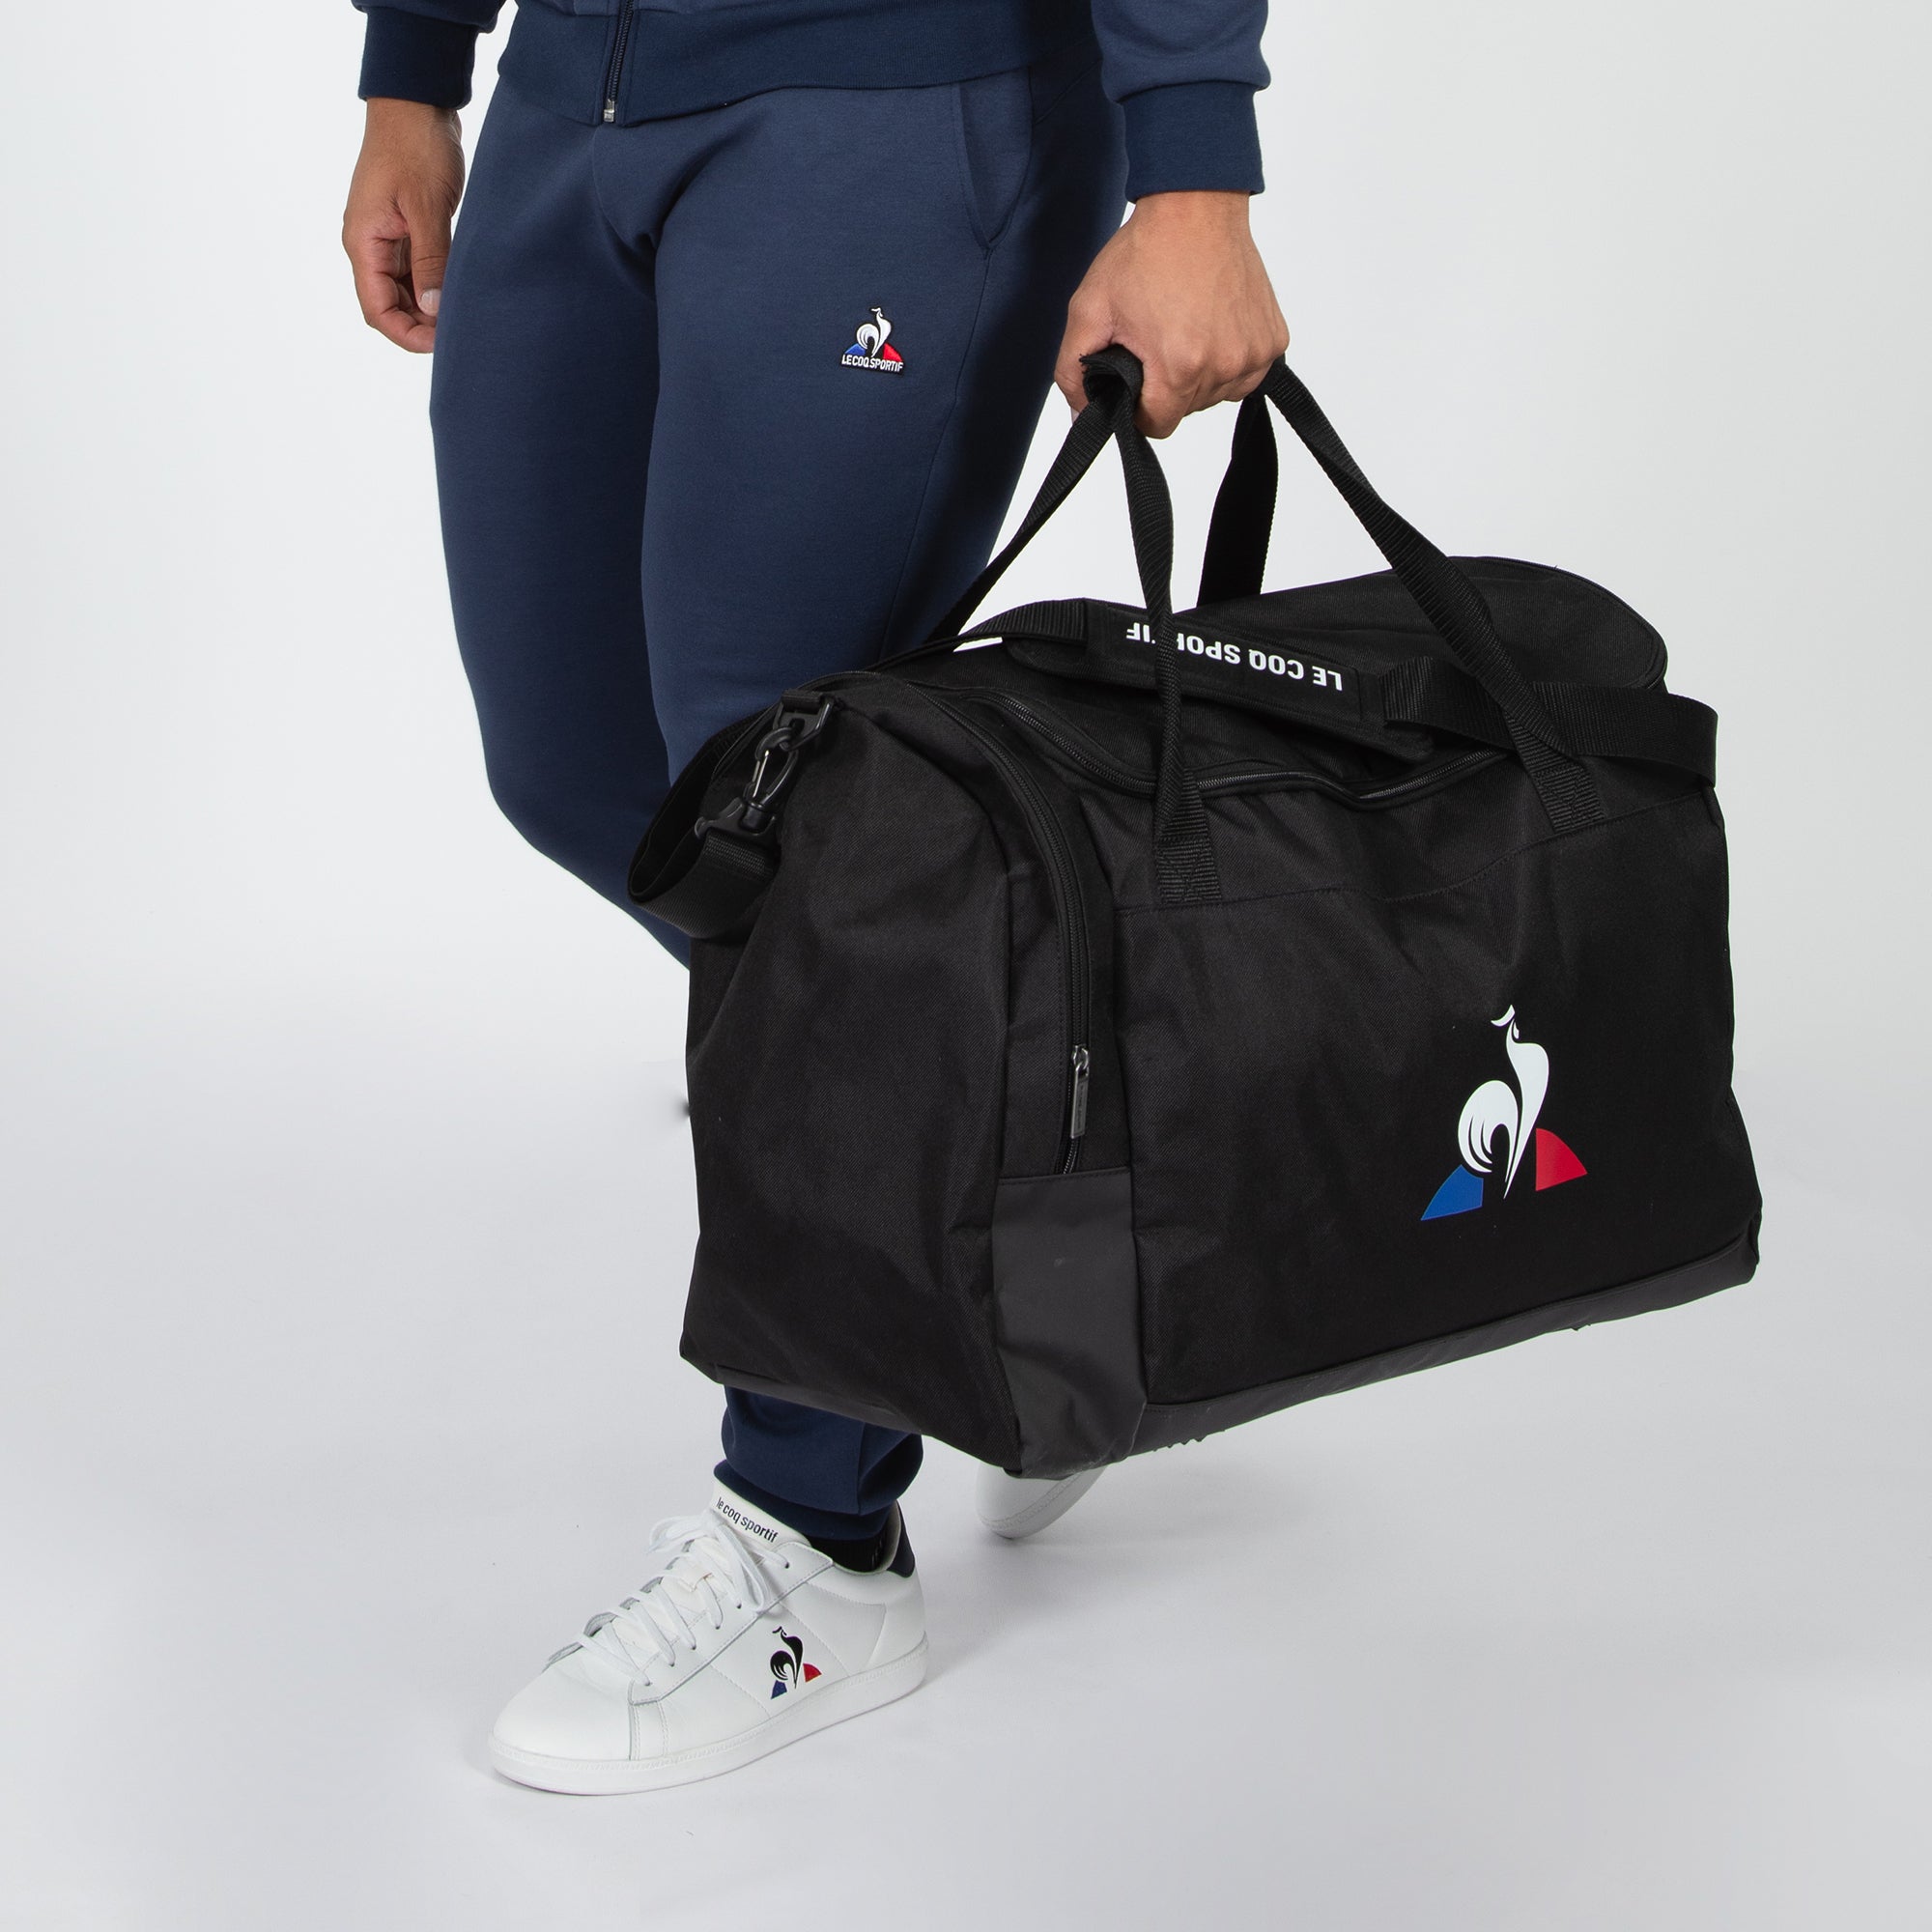 2020933-TRAINING Sportbag L/XL black  | Tasche de sport